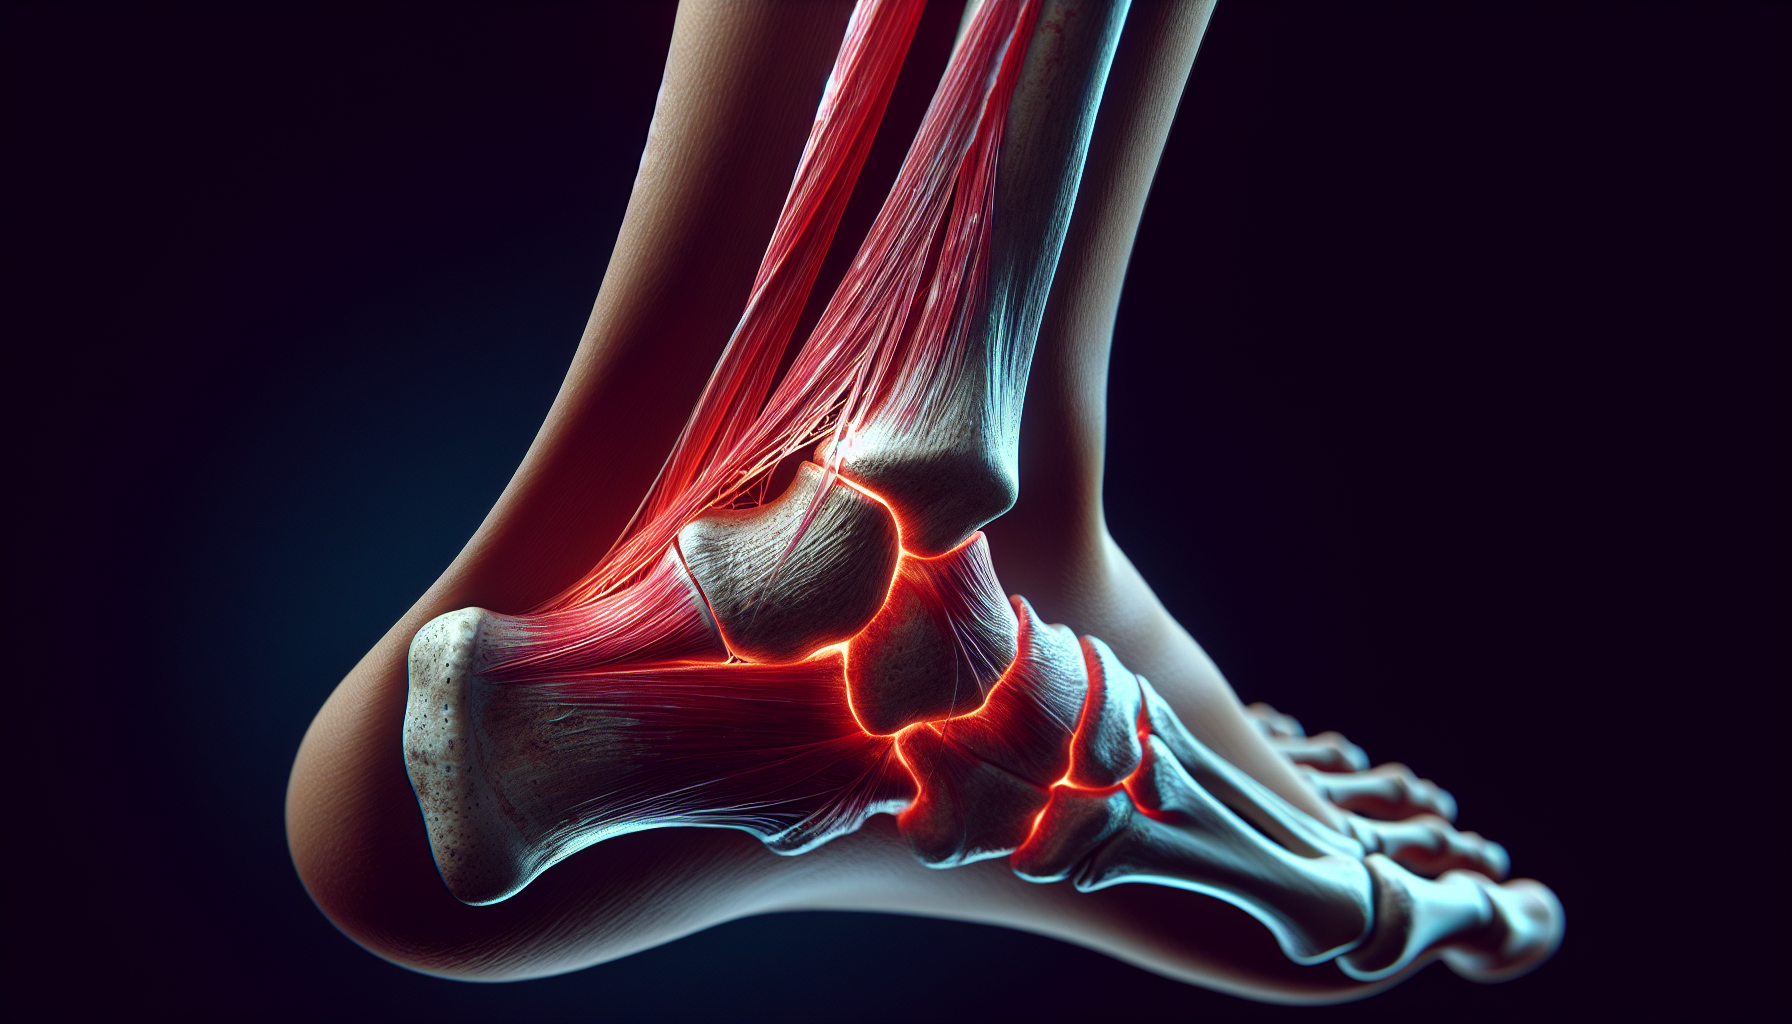 Achilles tendon with a visible damage